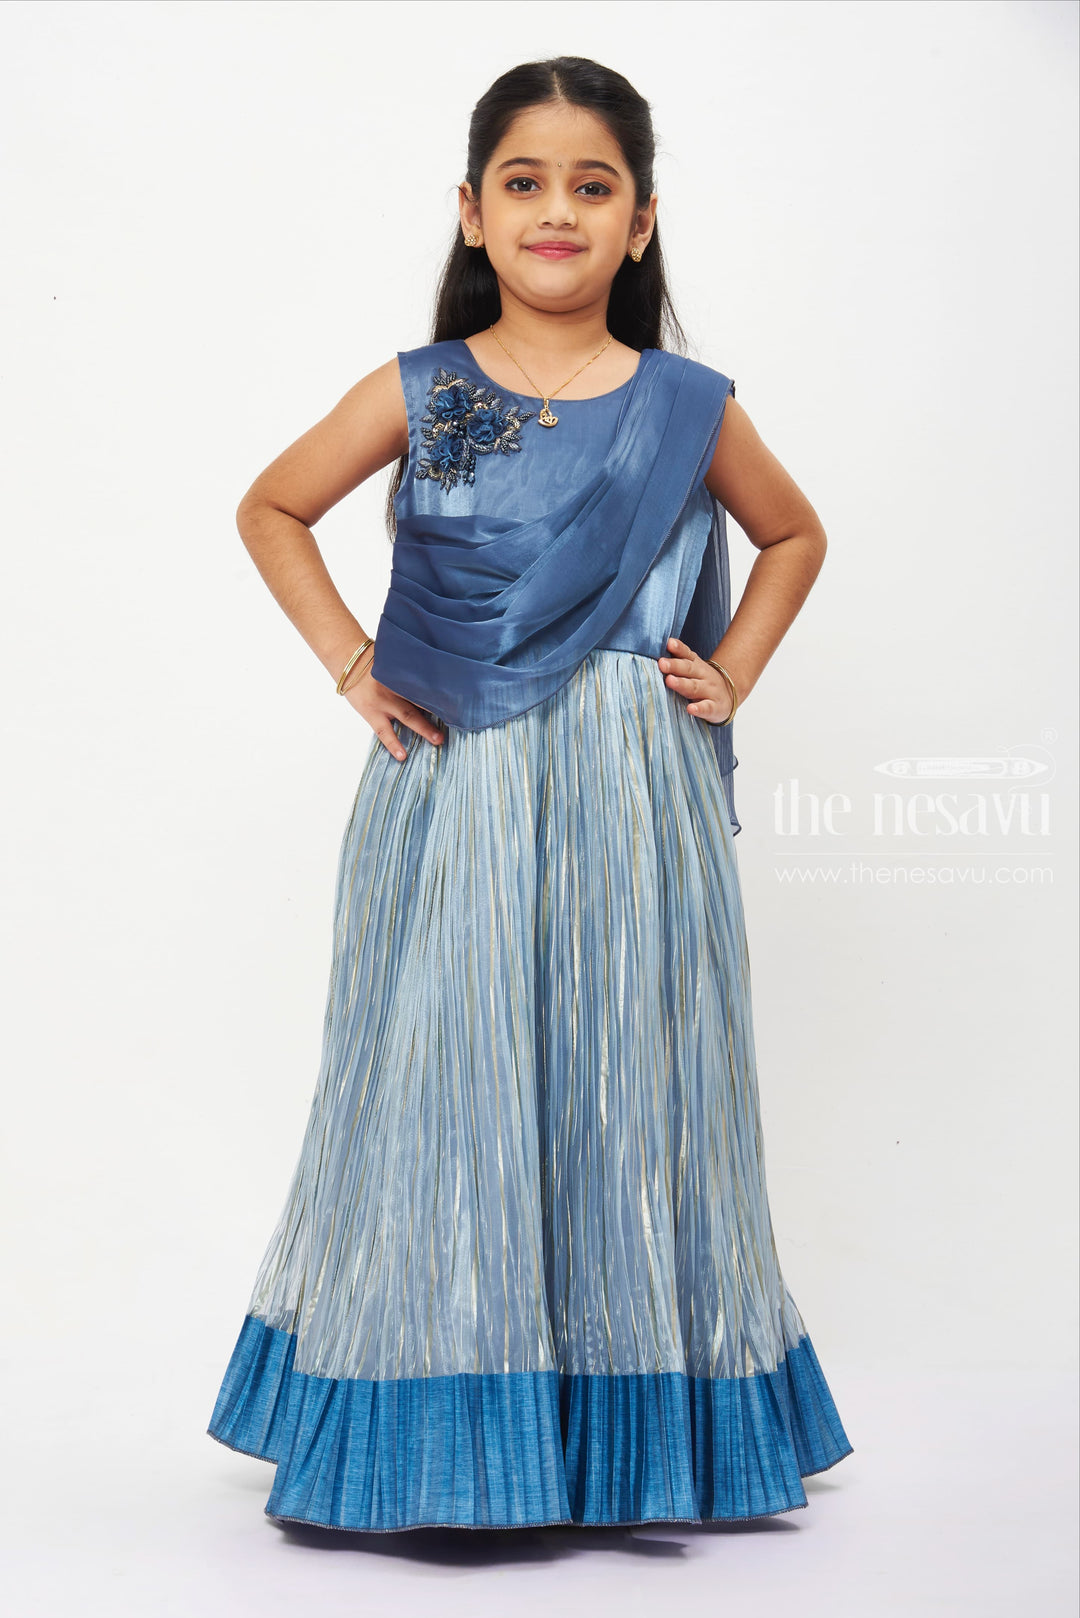 The Nesavu Girls Party Gown Girls Midnight Blue Anarkali Dress with Shimmering Accents Nesavu 22 (4Y) / Blue / Organza GA191B-22 Girls Designer Anarkali Dress in Midnight Blue | Festive Kids Wear | The Nesavu